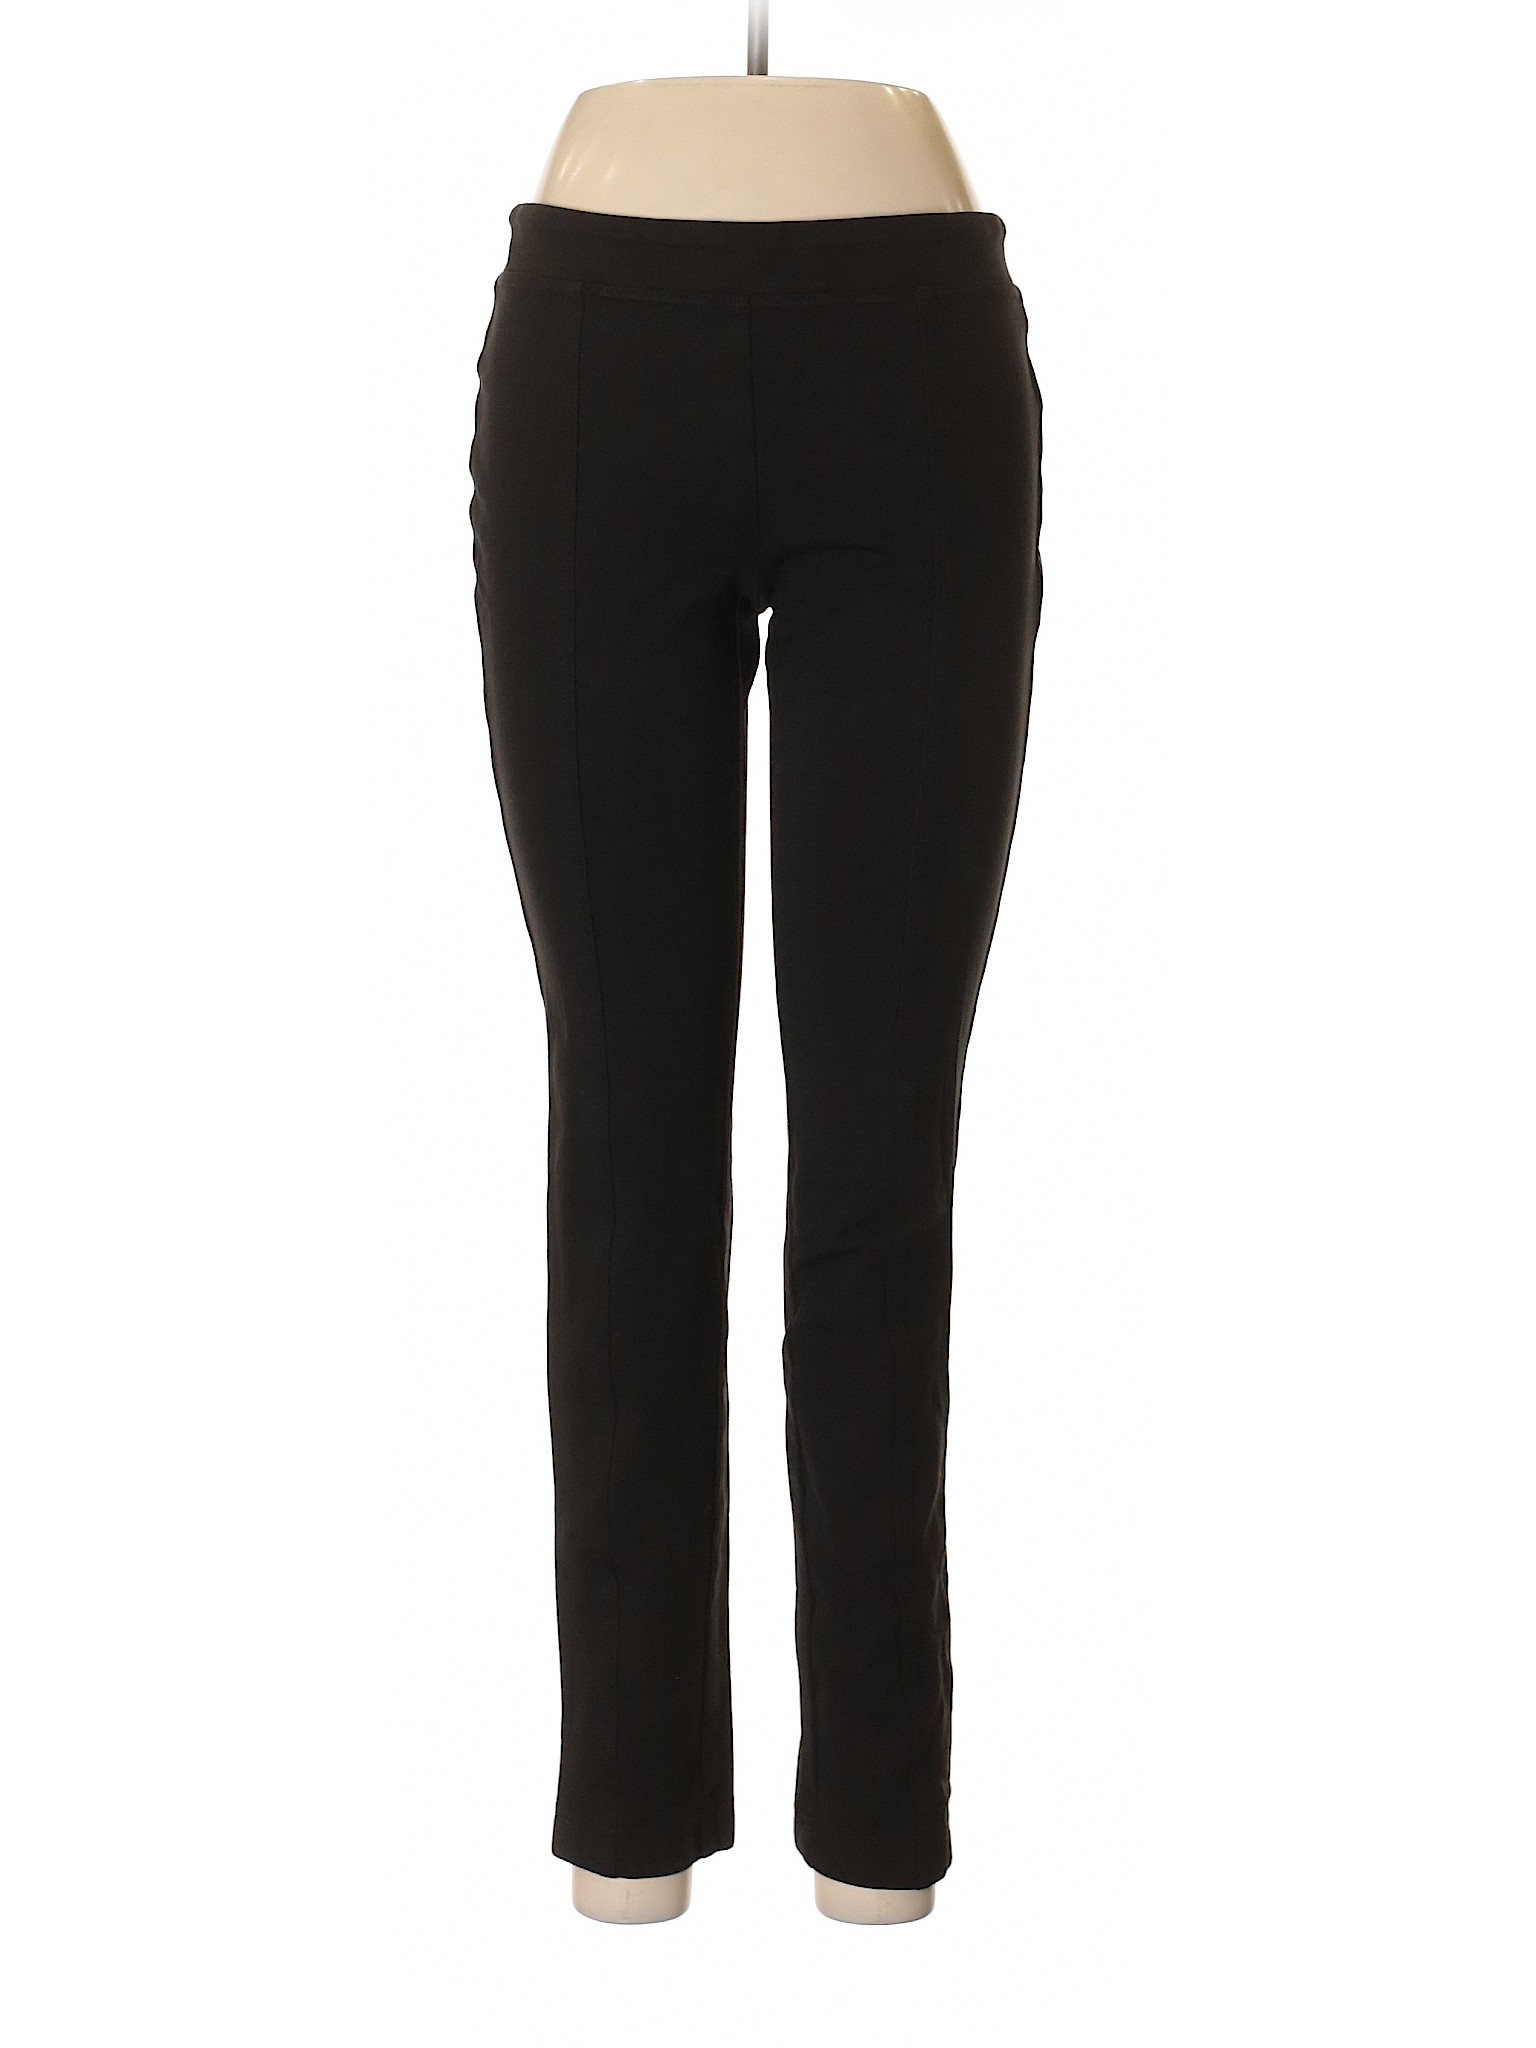 Dalia Women Black Casual Pants 6 | eBay